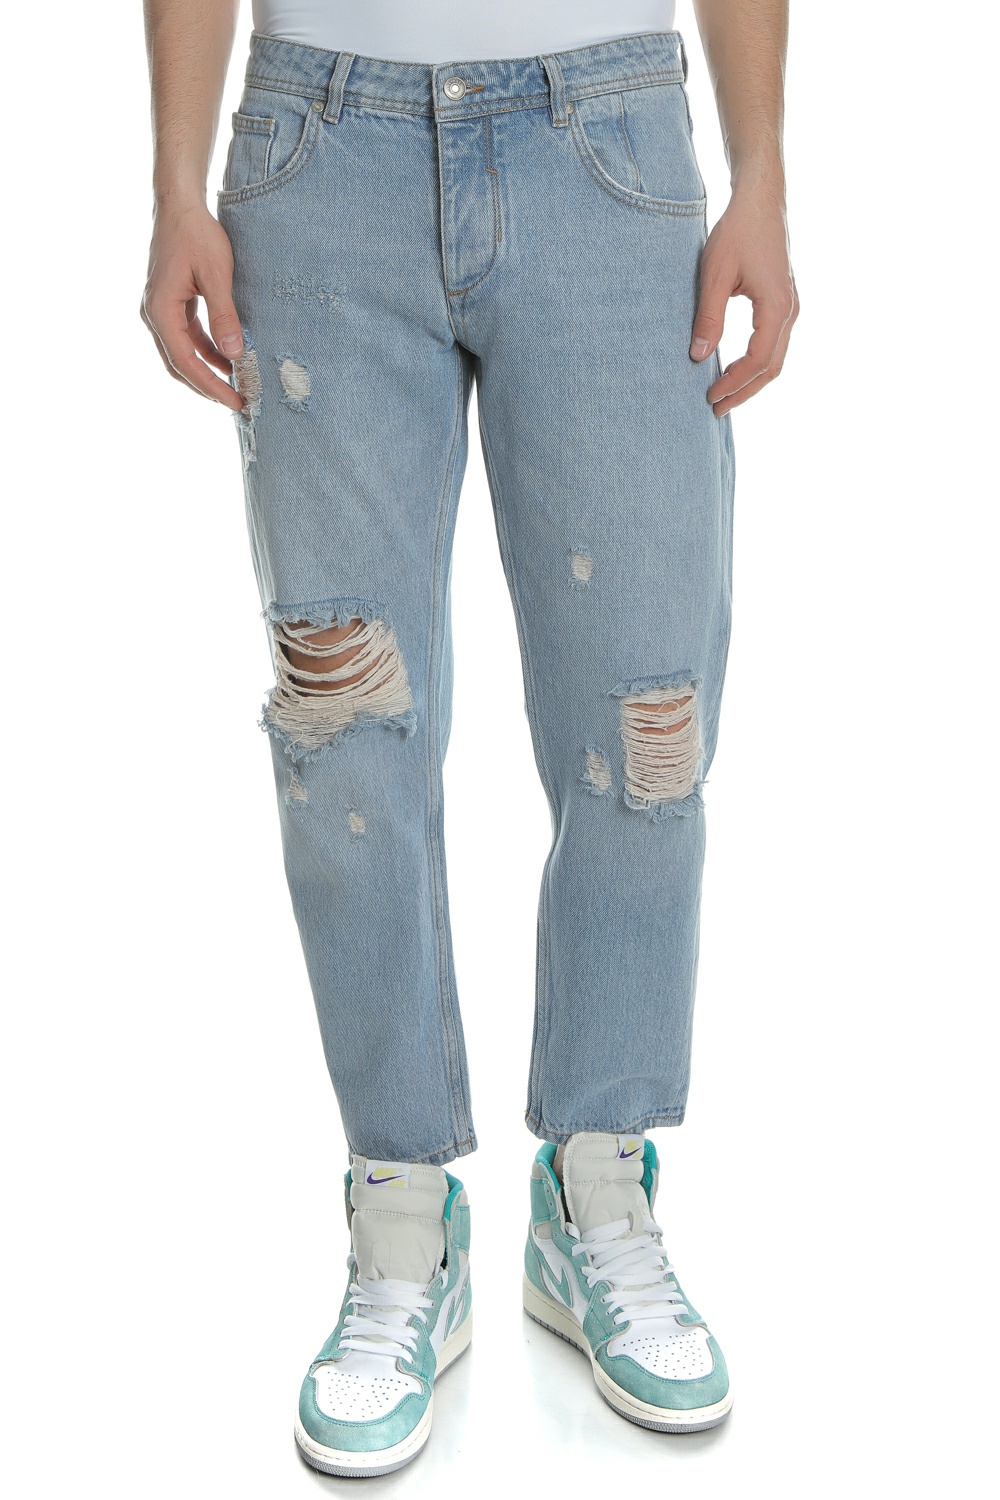 SSEINSE - Ανδρικό cropped τζιν παντελόνι SSEINSE μπλε με σκισίματα Ανδρικά/Ρούχα/Τζίν/Straight